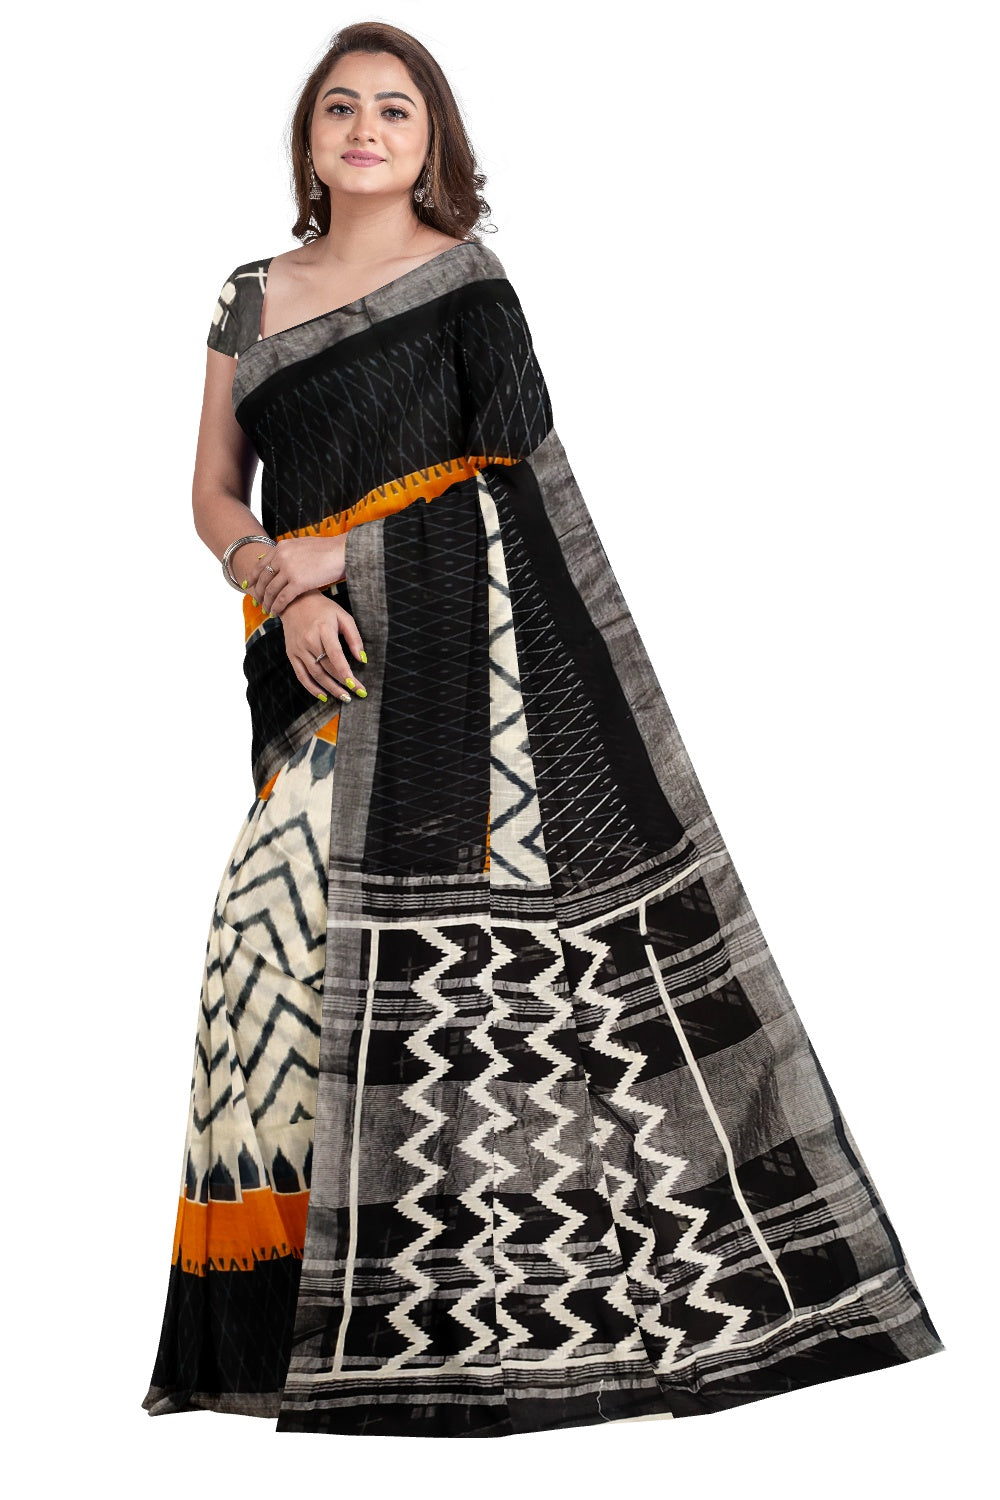 Southloom Linen Cotton Black and White Designer Saree